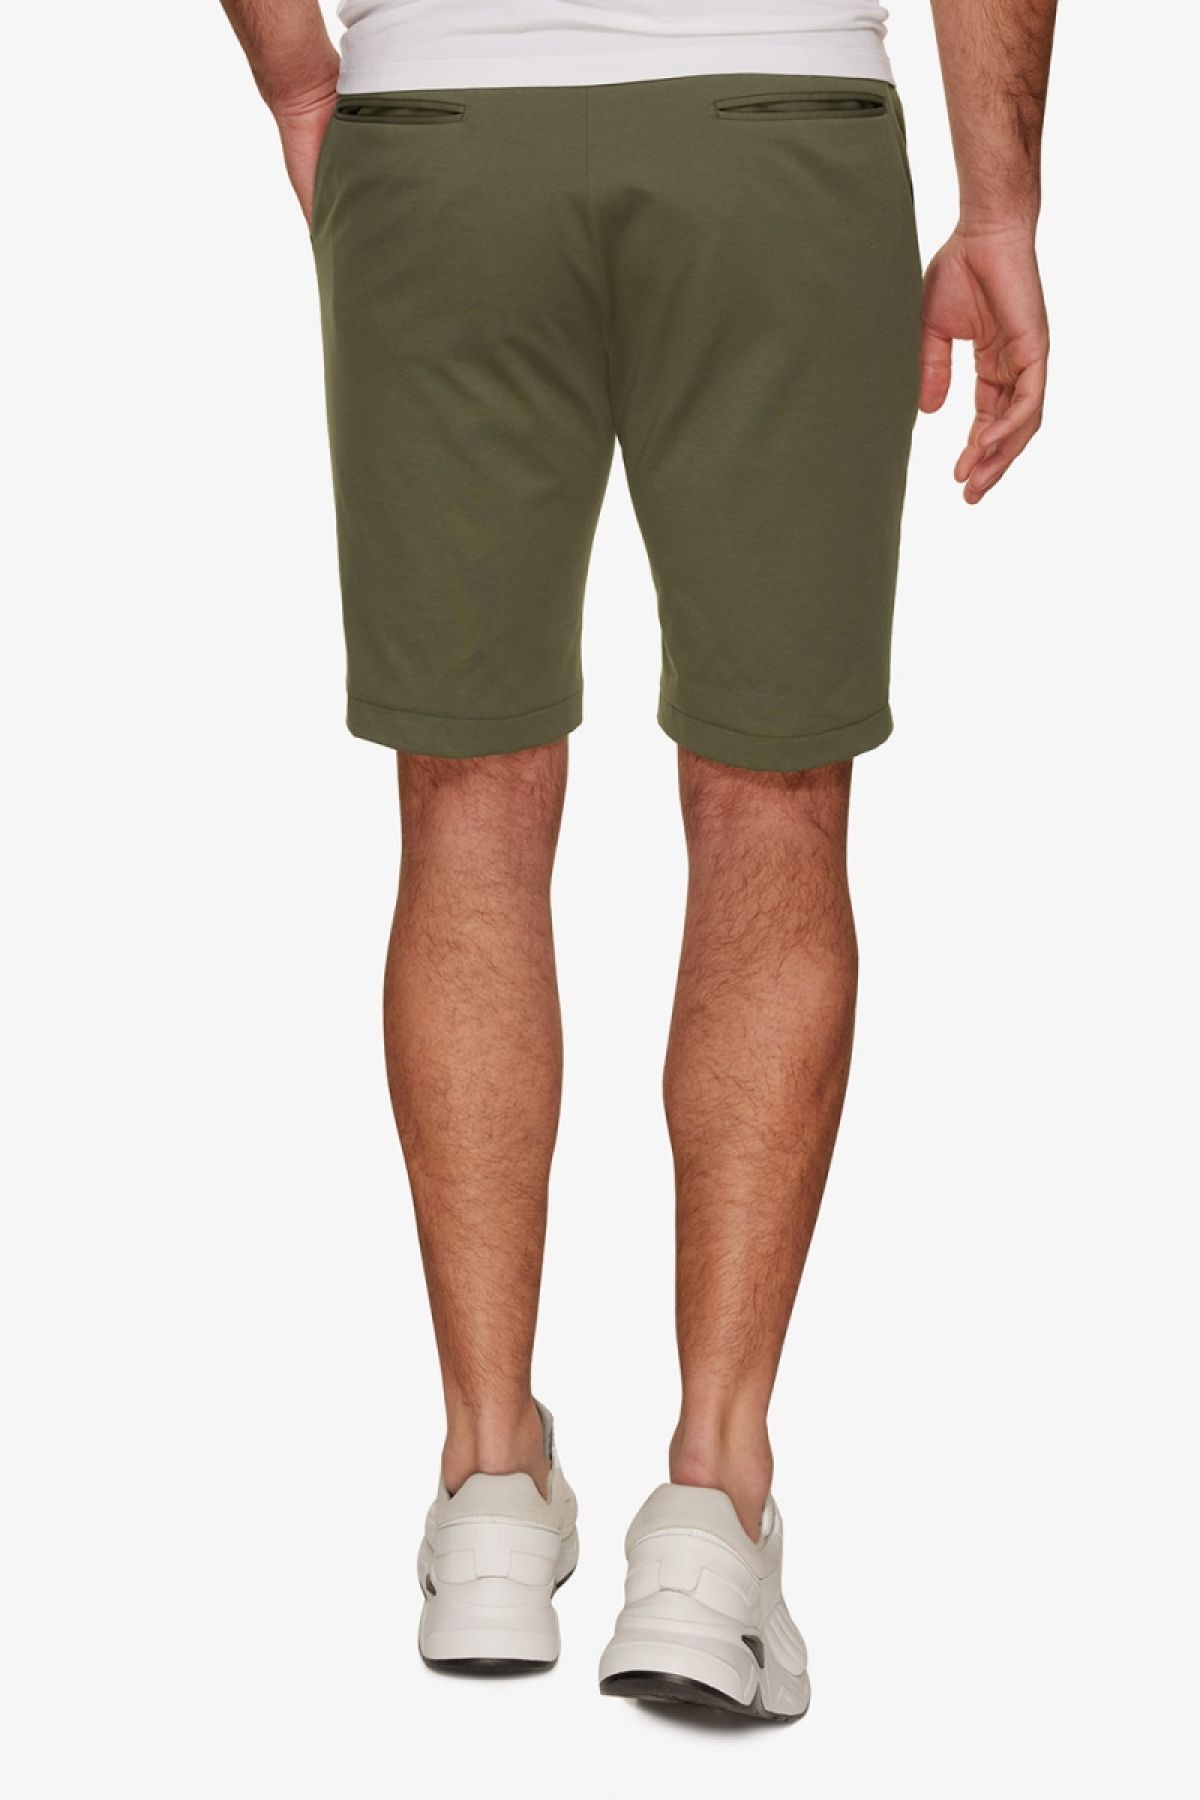 Dynamic shorts groen